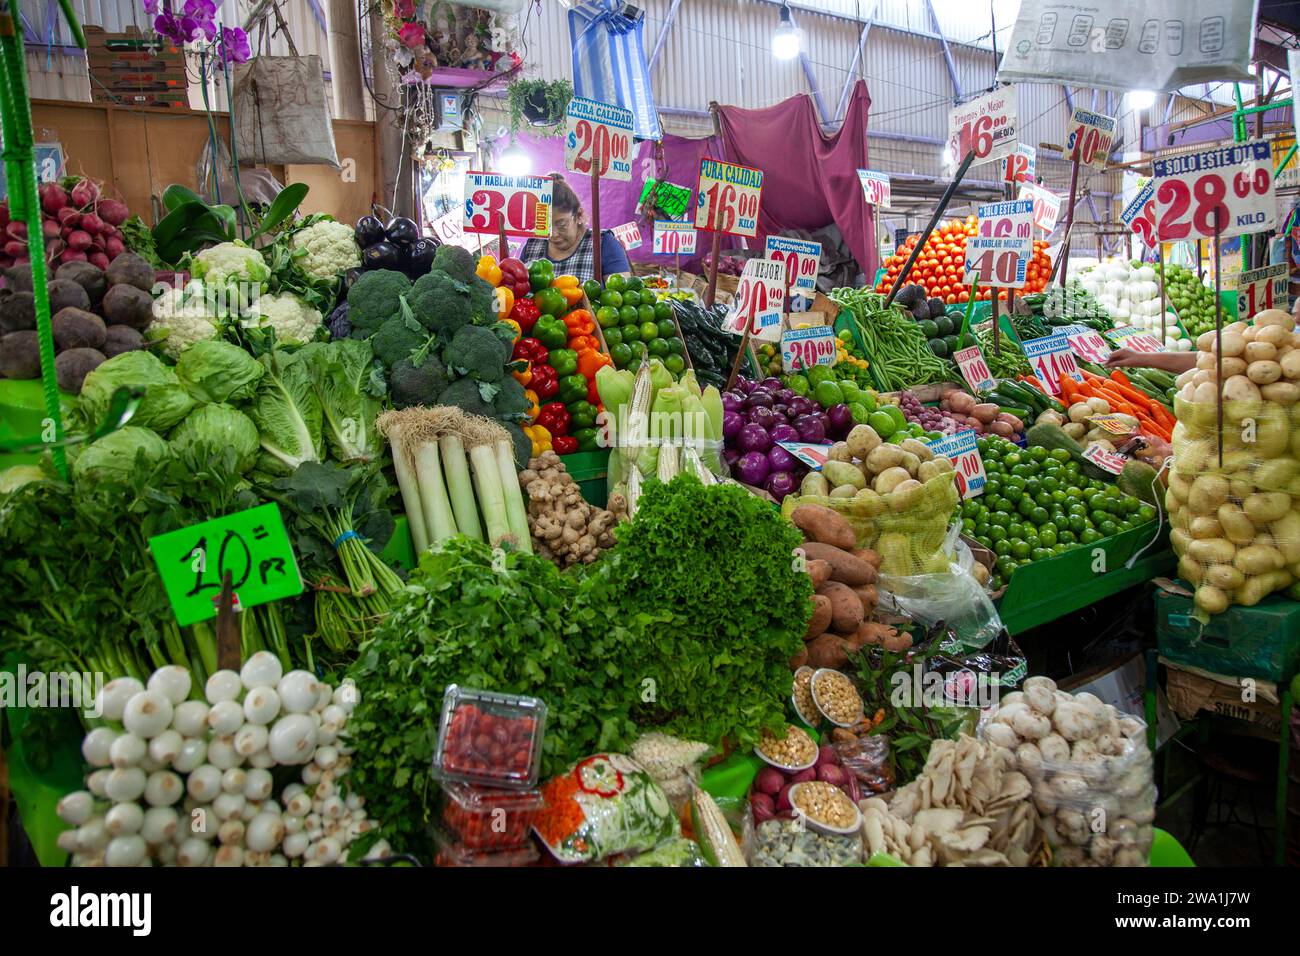 Produce Stalls at Jamaica market in Mexico City, Mexico Stock Photo